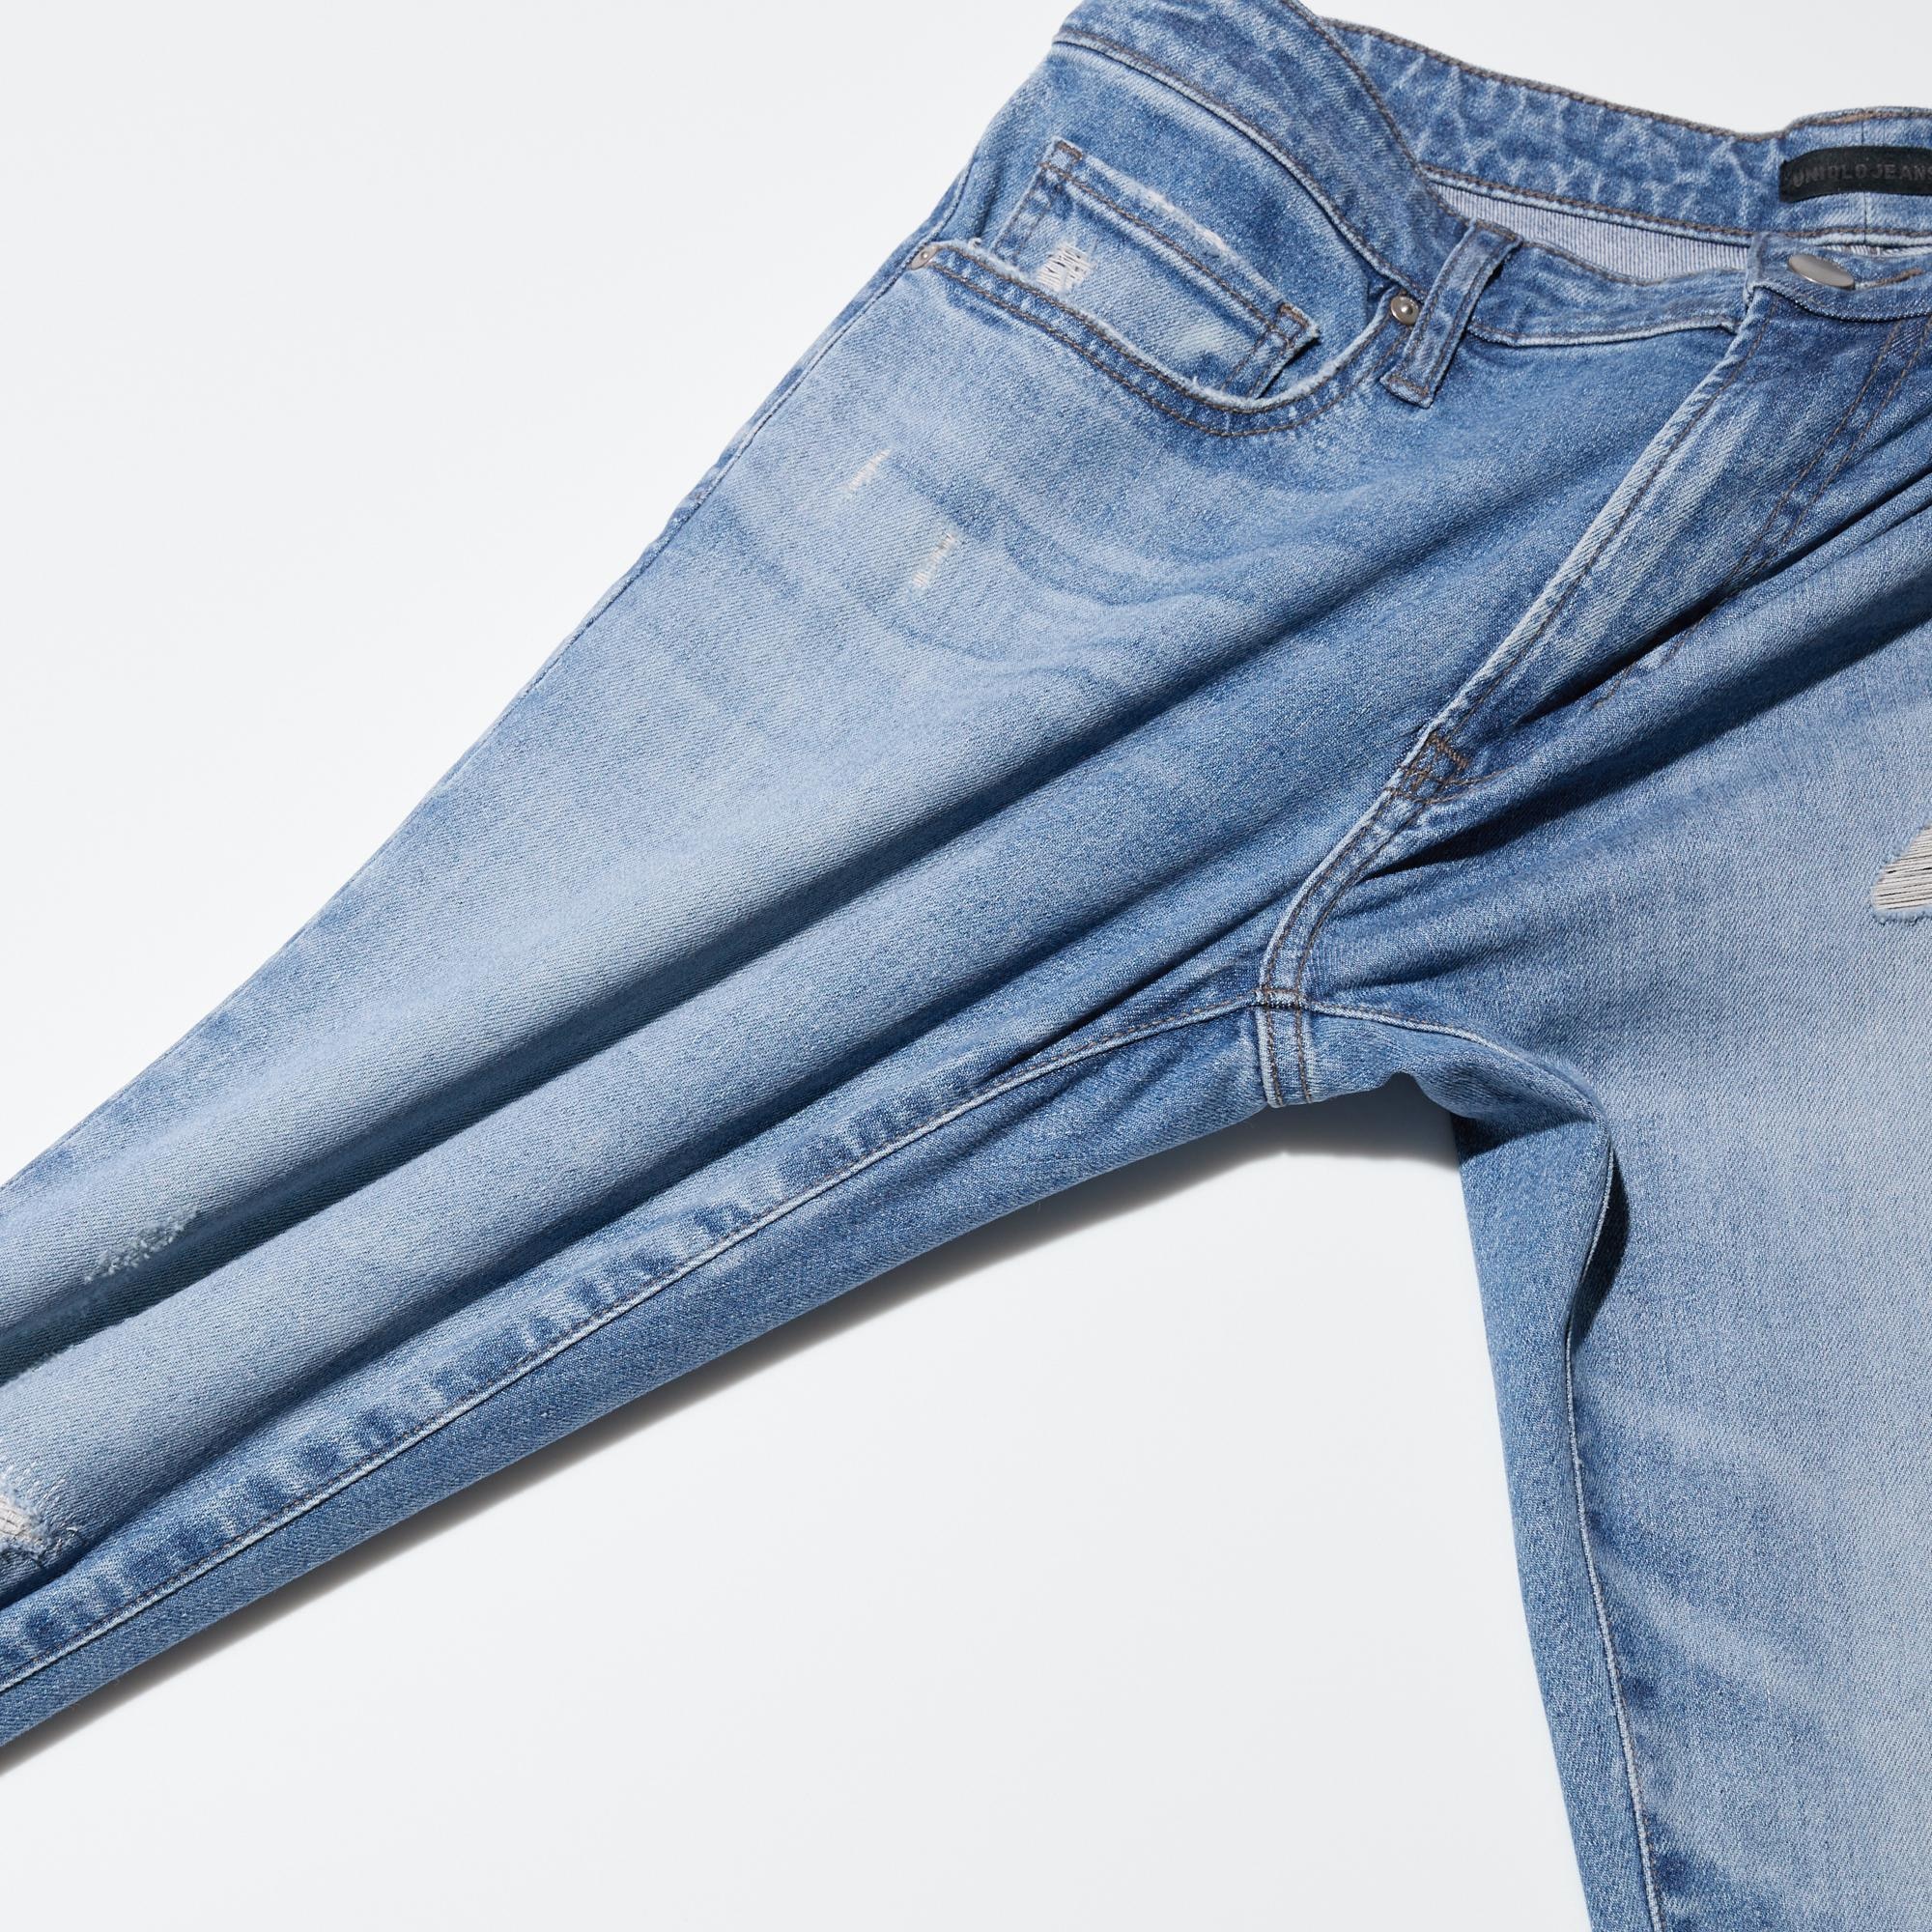 Skinny Fit Distressed Jeans